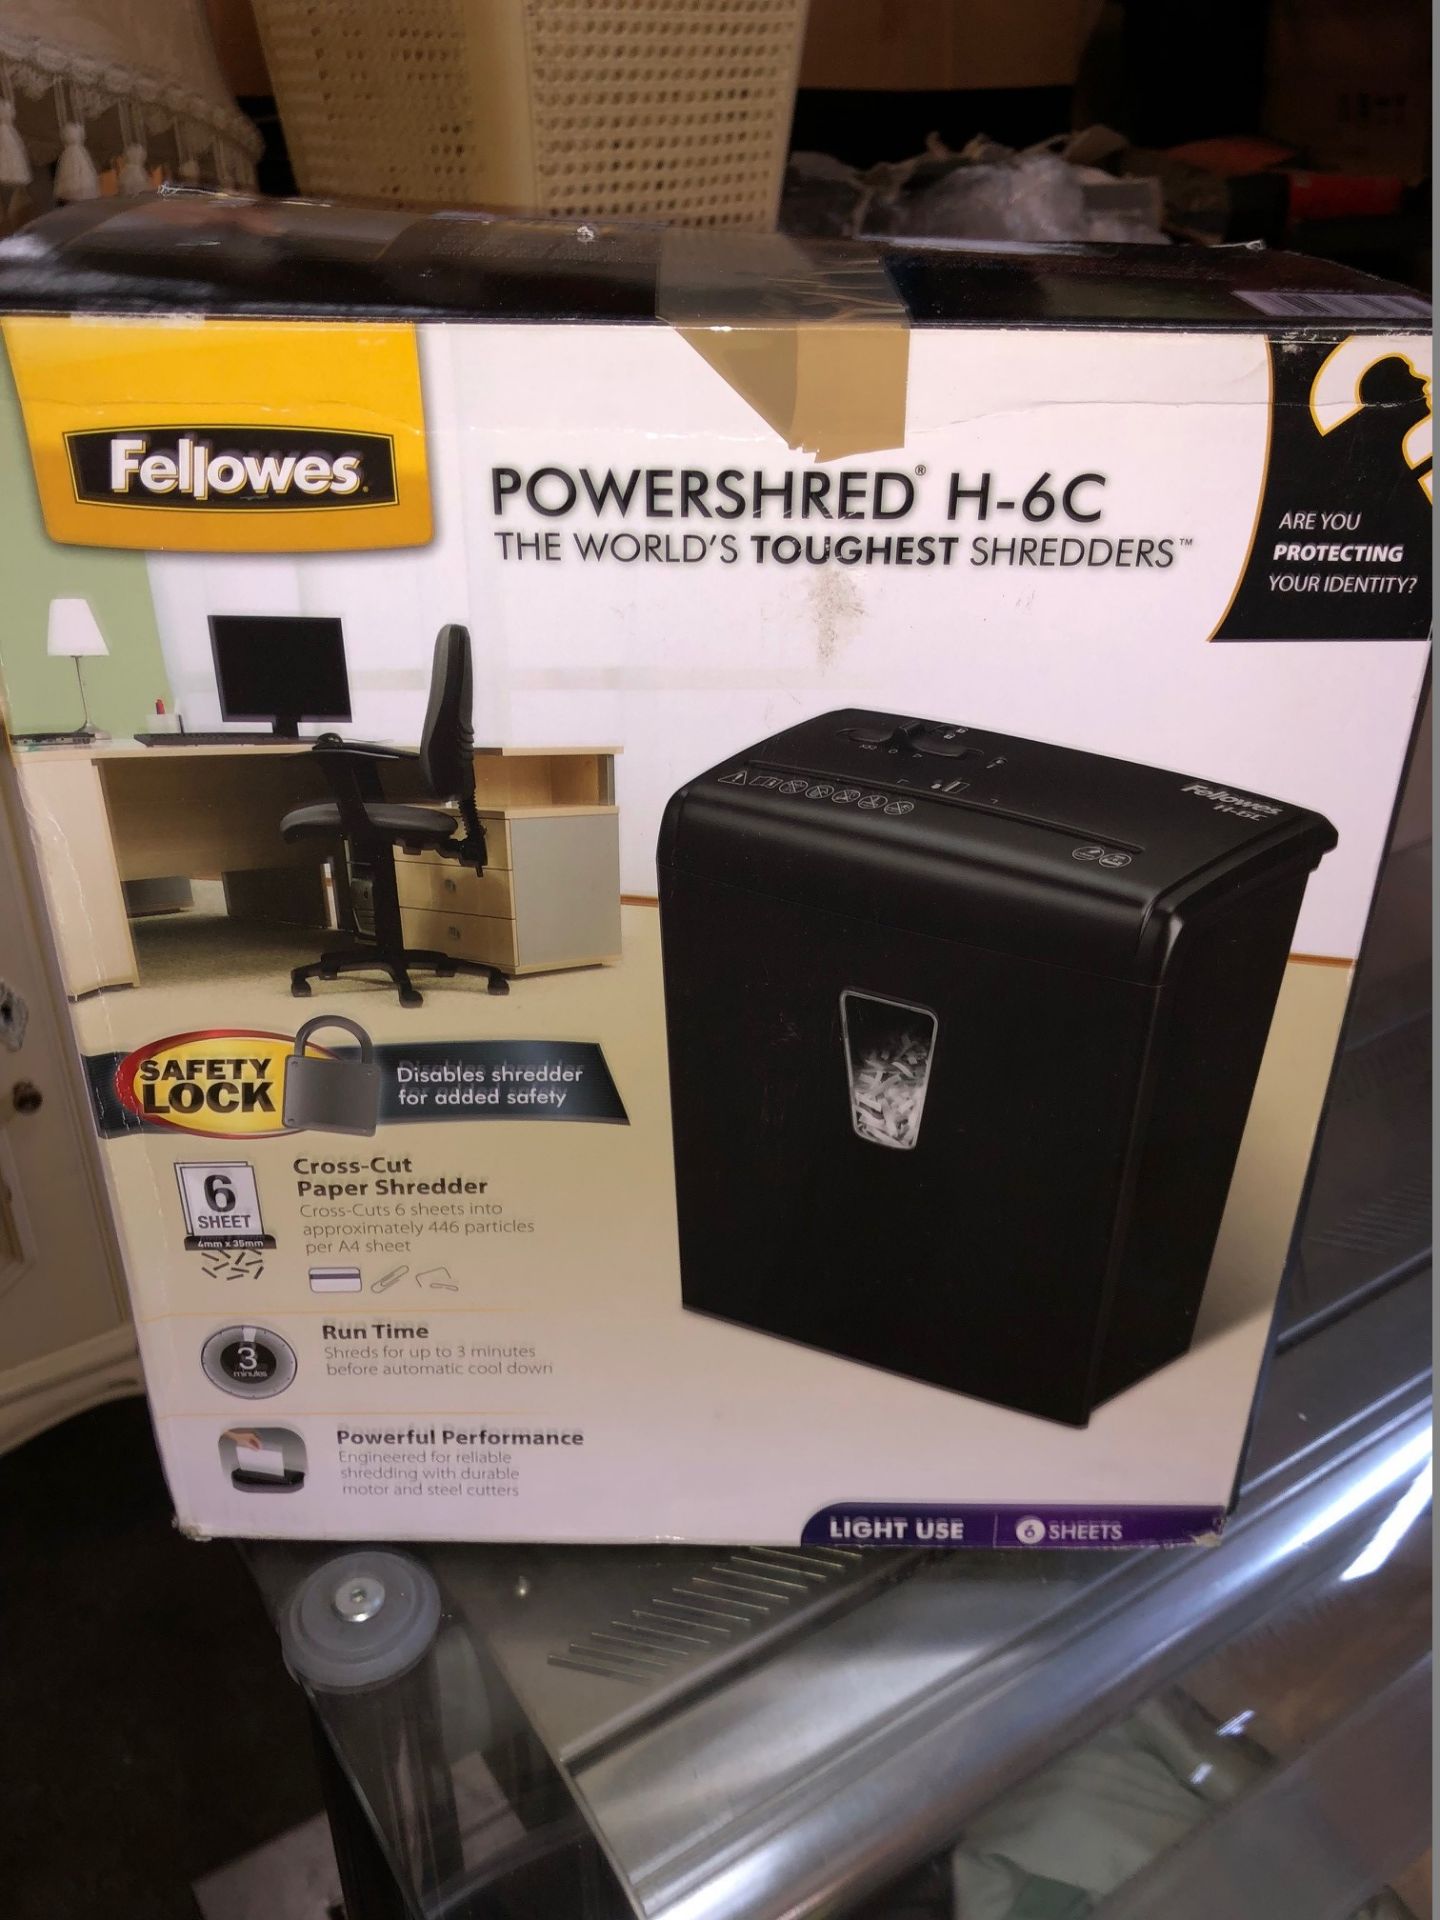 Fellowes Powershred H-6c Shredder